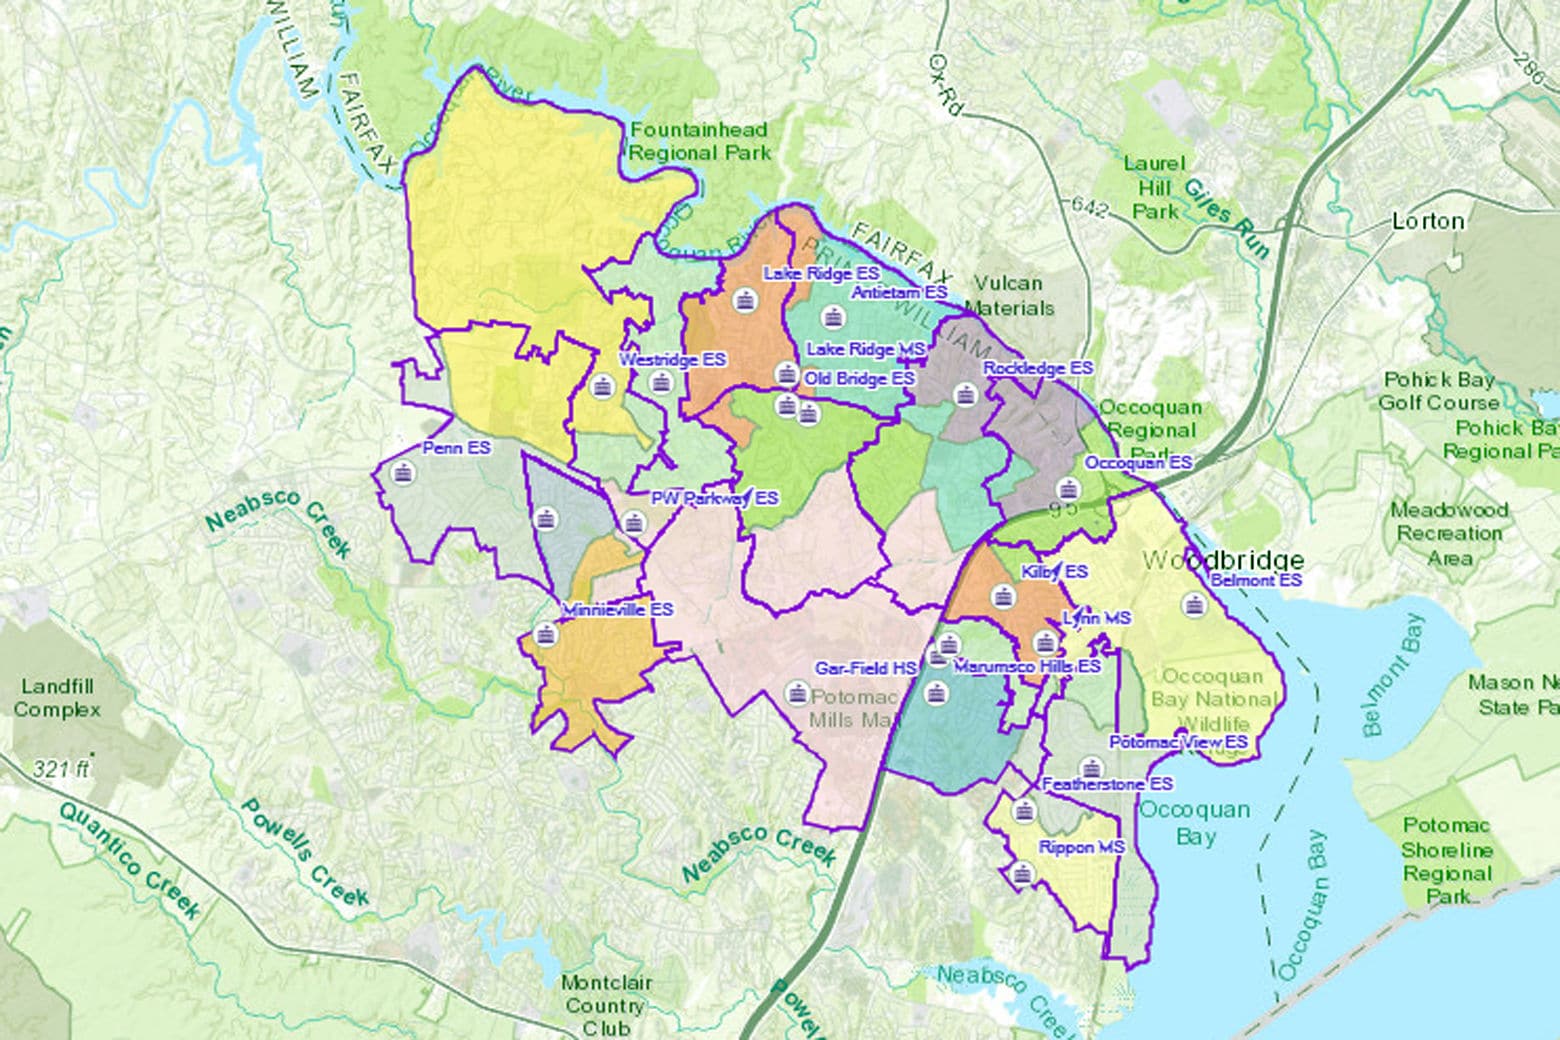 Potomac Mills Map - Retail area - Prince William County, Virginia, USA